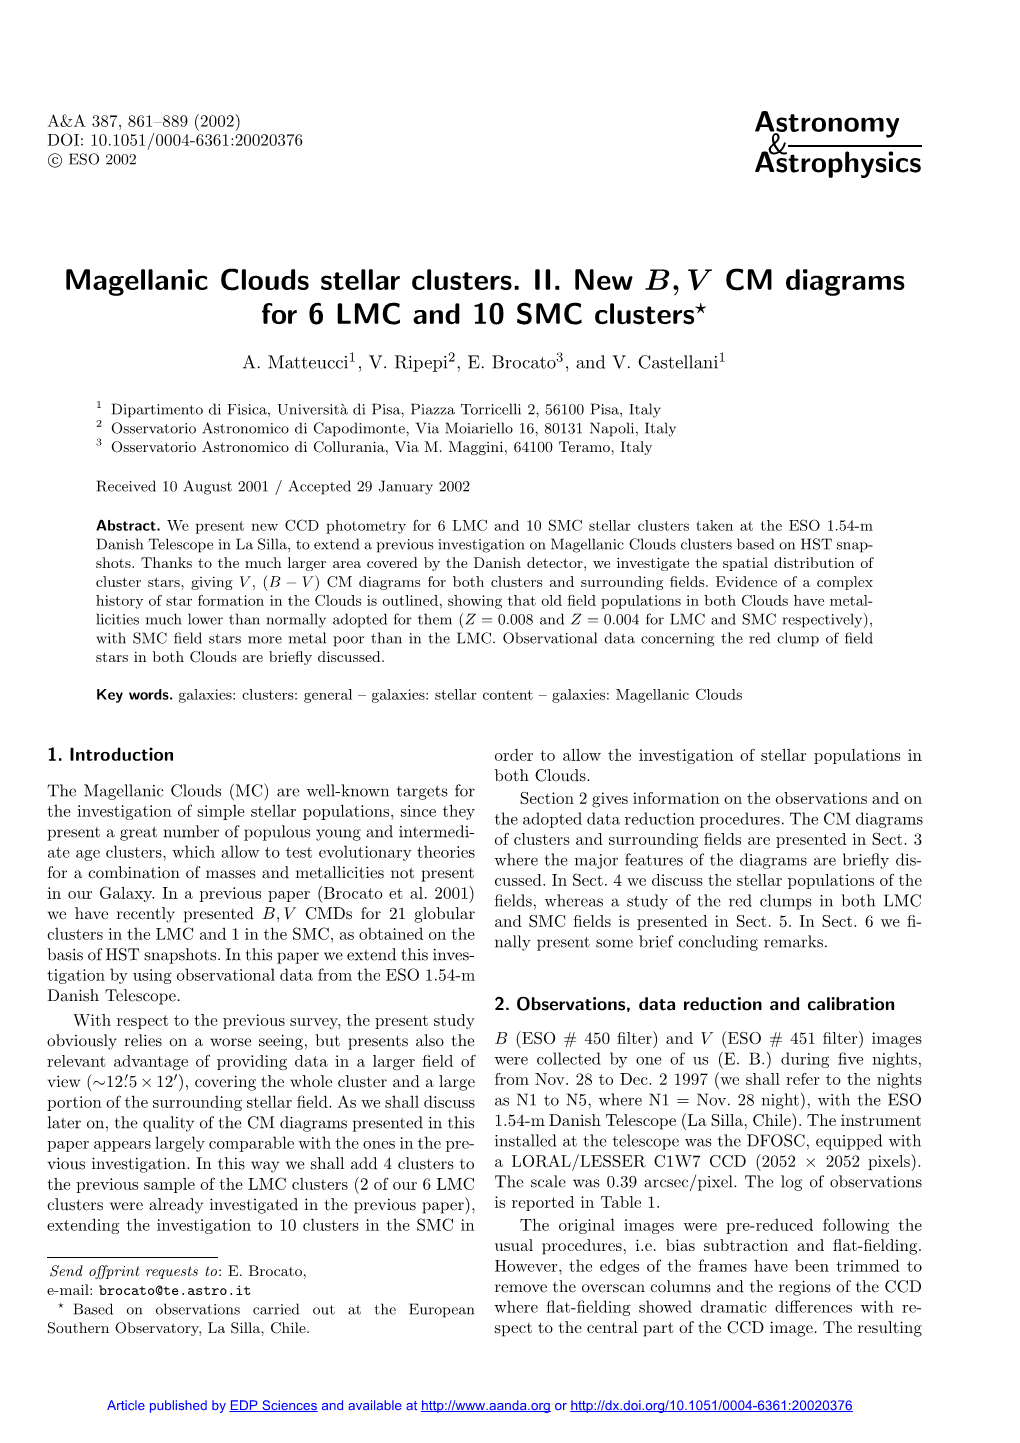 Magellanic Clouds Stellar Clusters. II. New $B,V$ CM Diagrams for 6 LMC